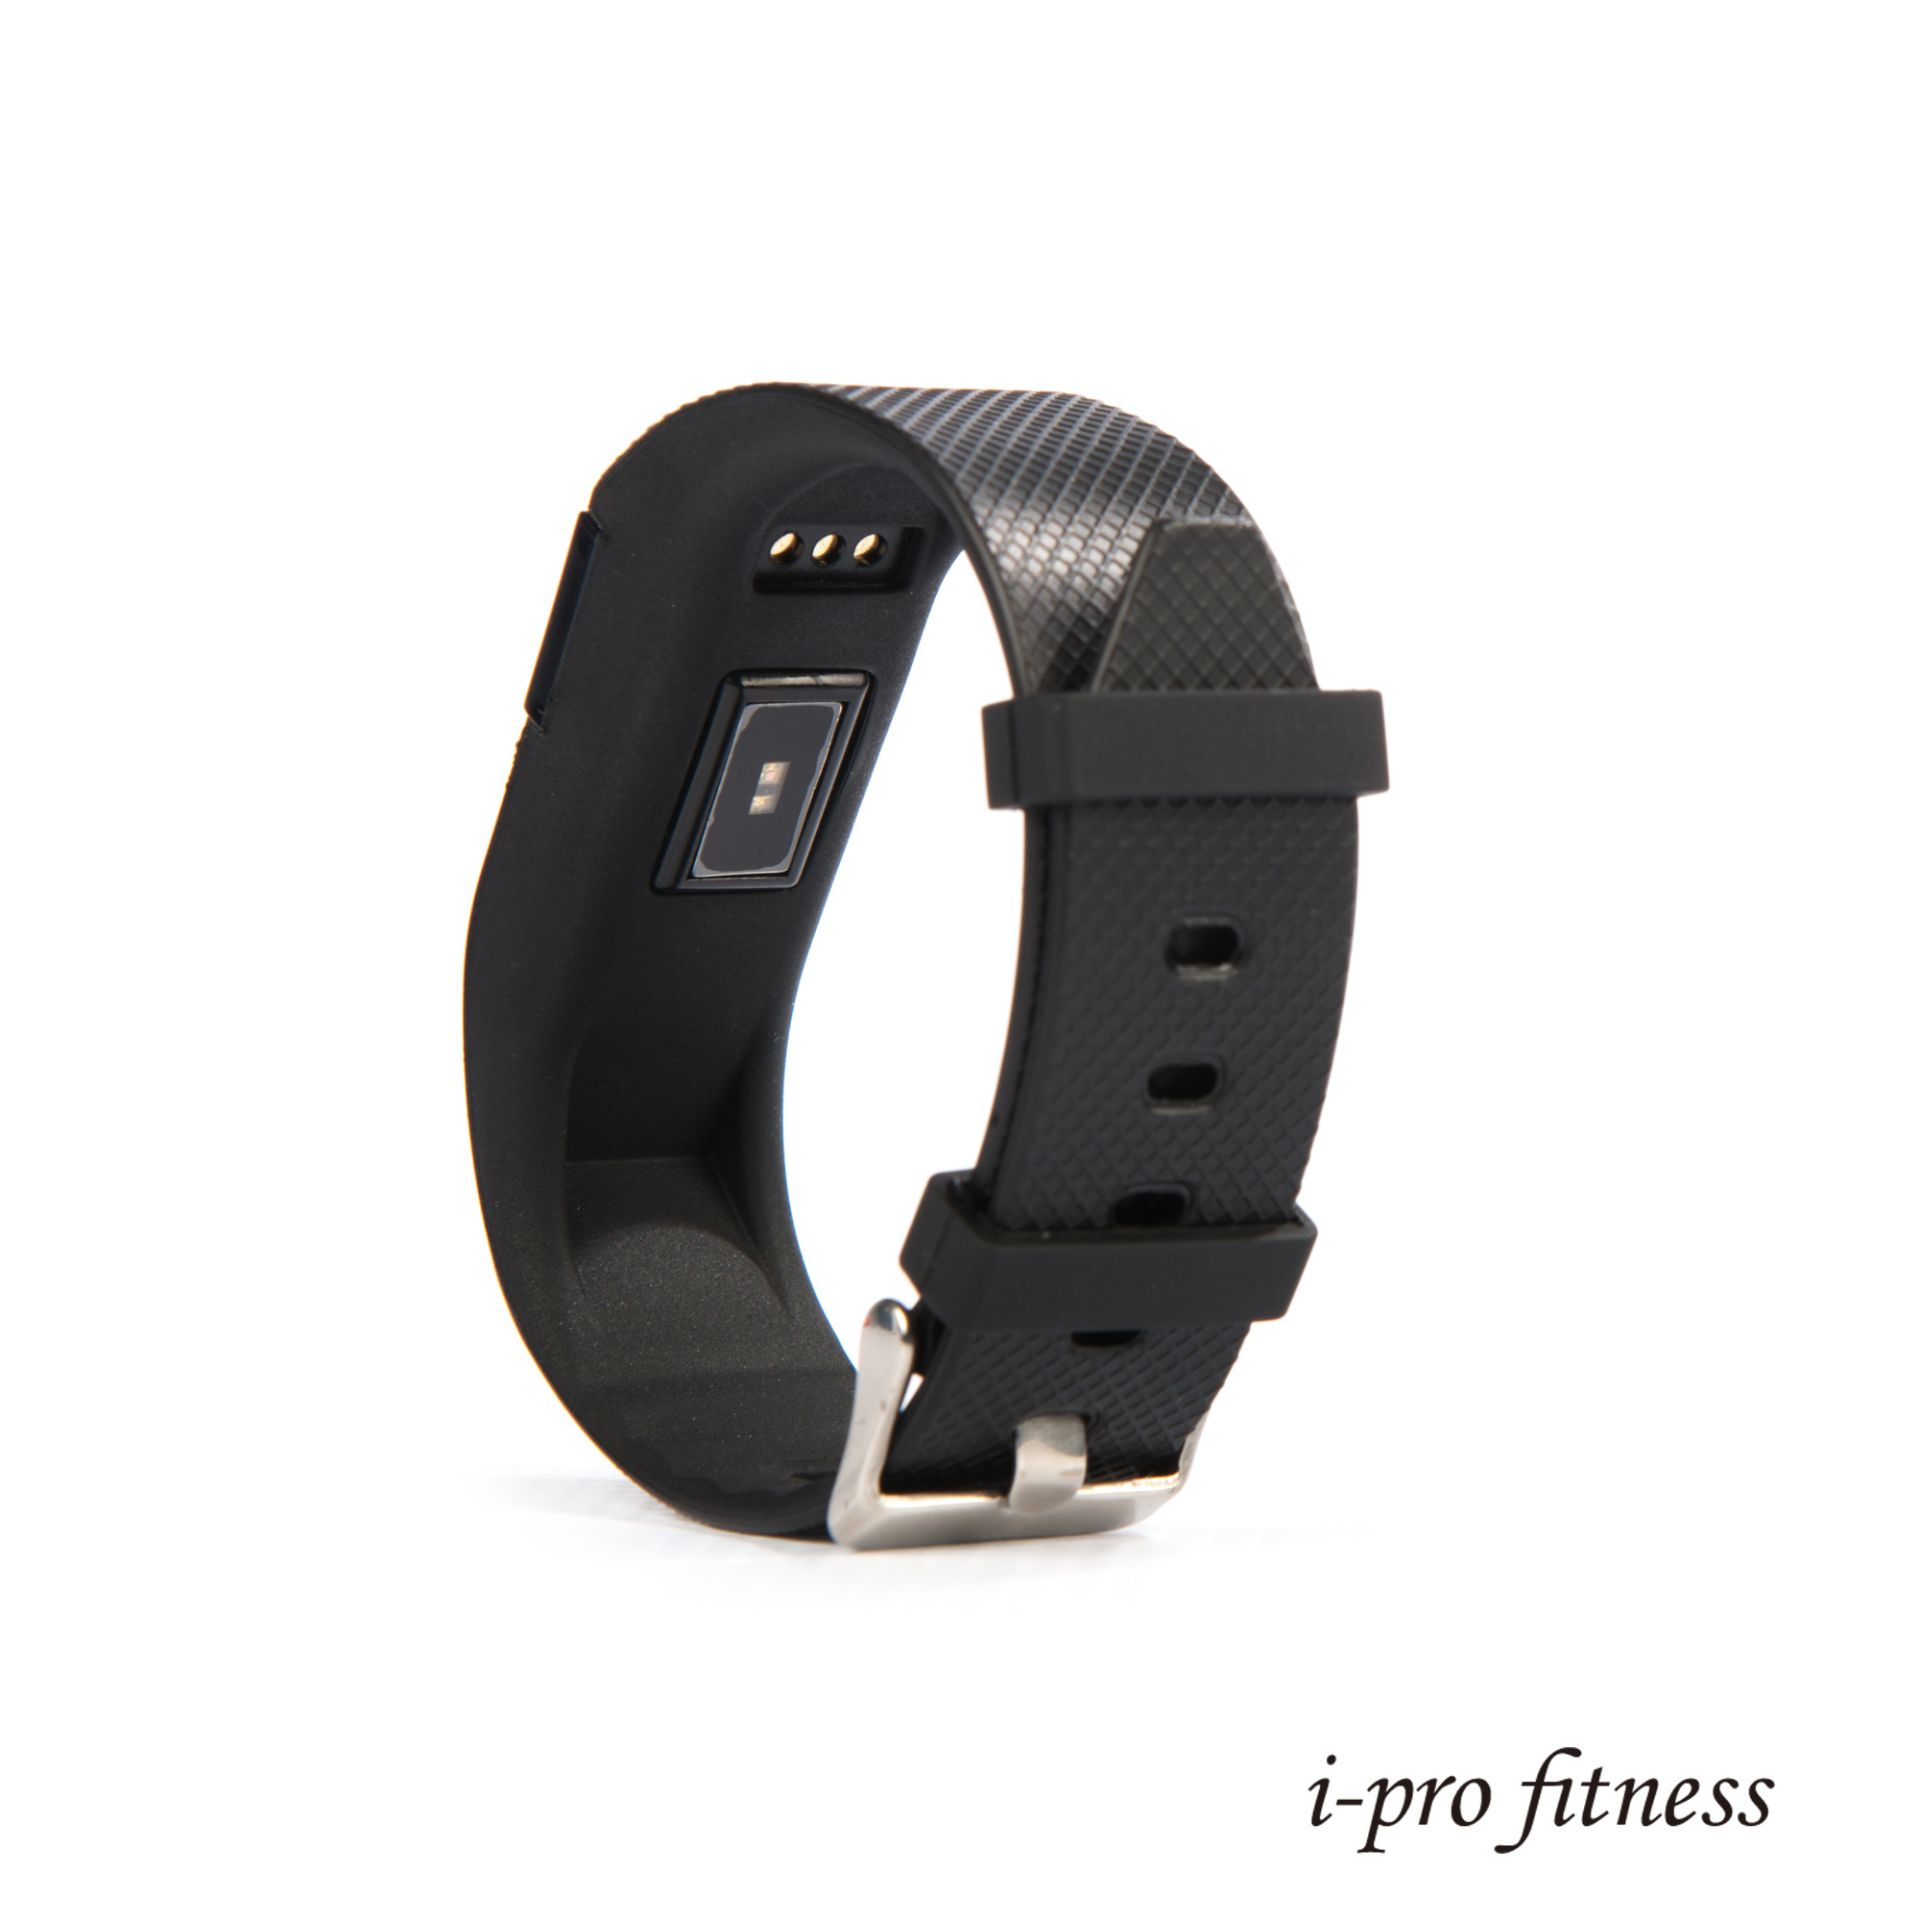 20x Fitness Tracker i-pro fitness, Bluetooth 4.0 Sports Smart Bracelet. - Image 8 of 8